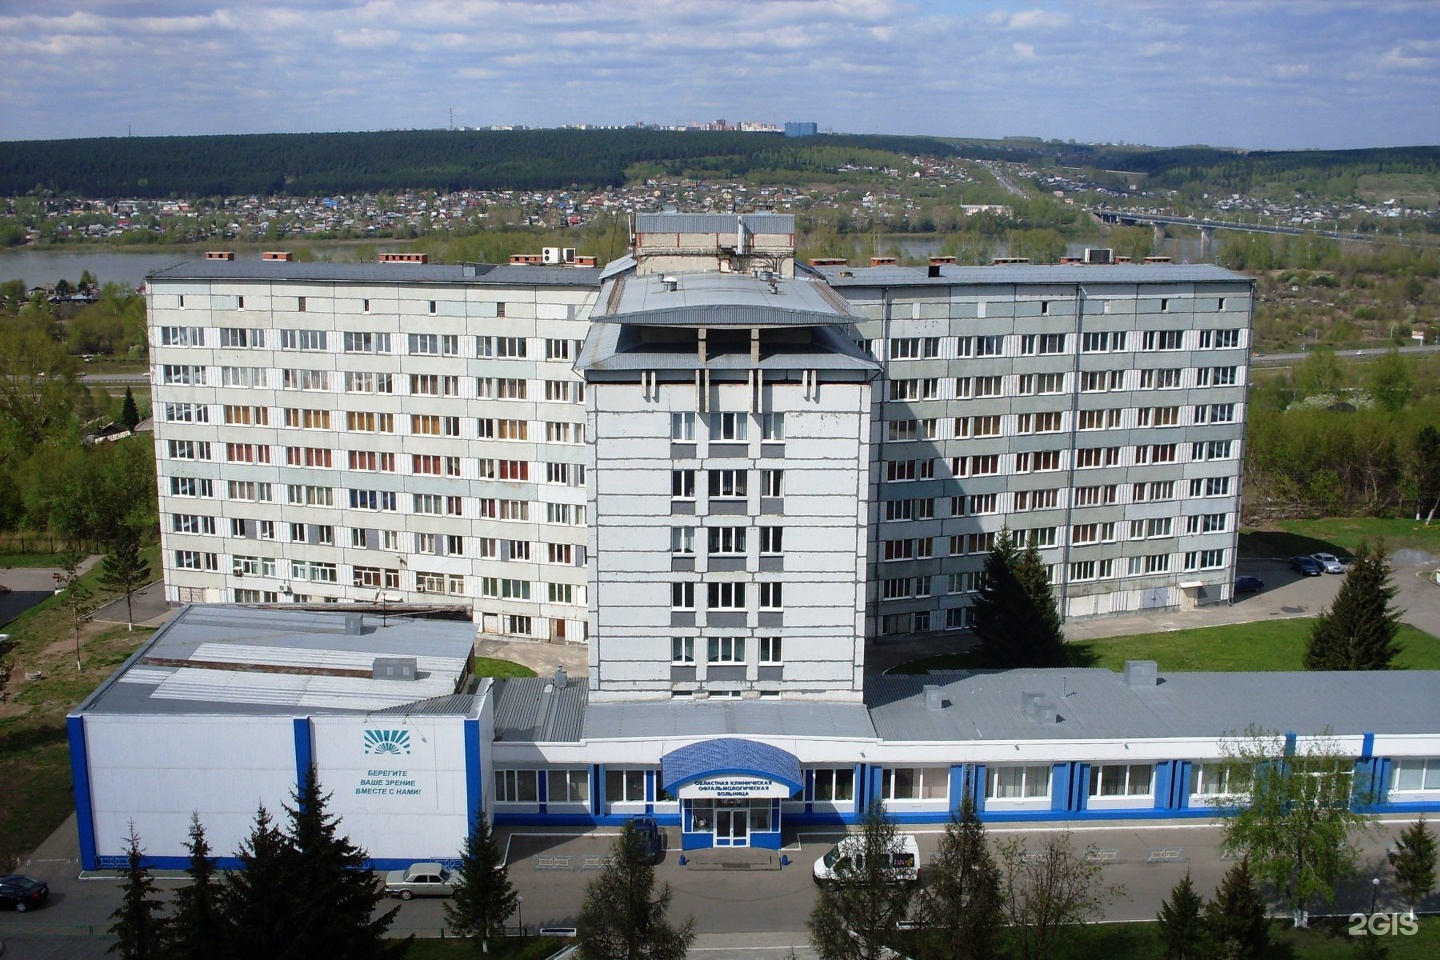 Александрова 7 больница